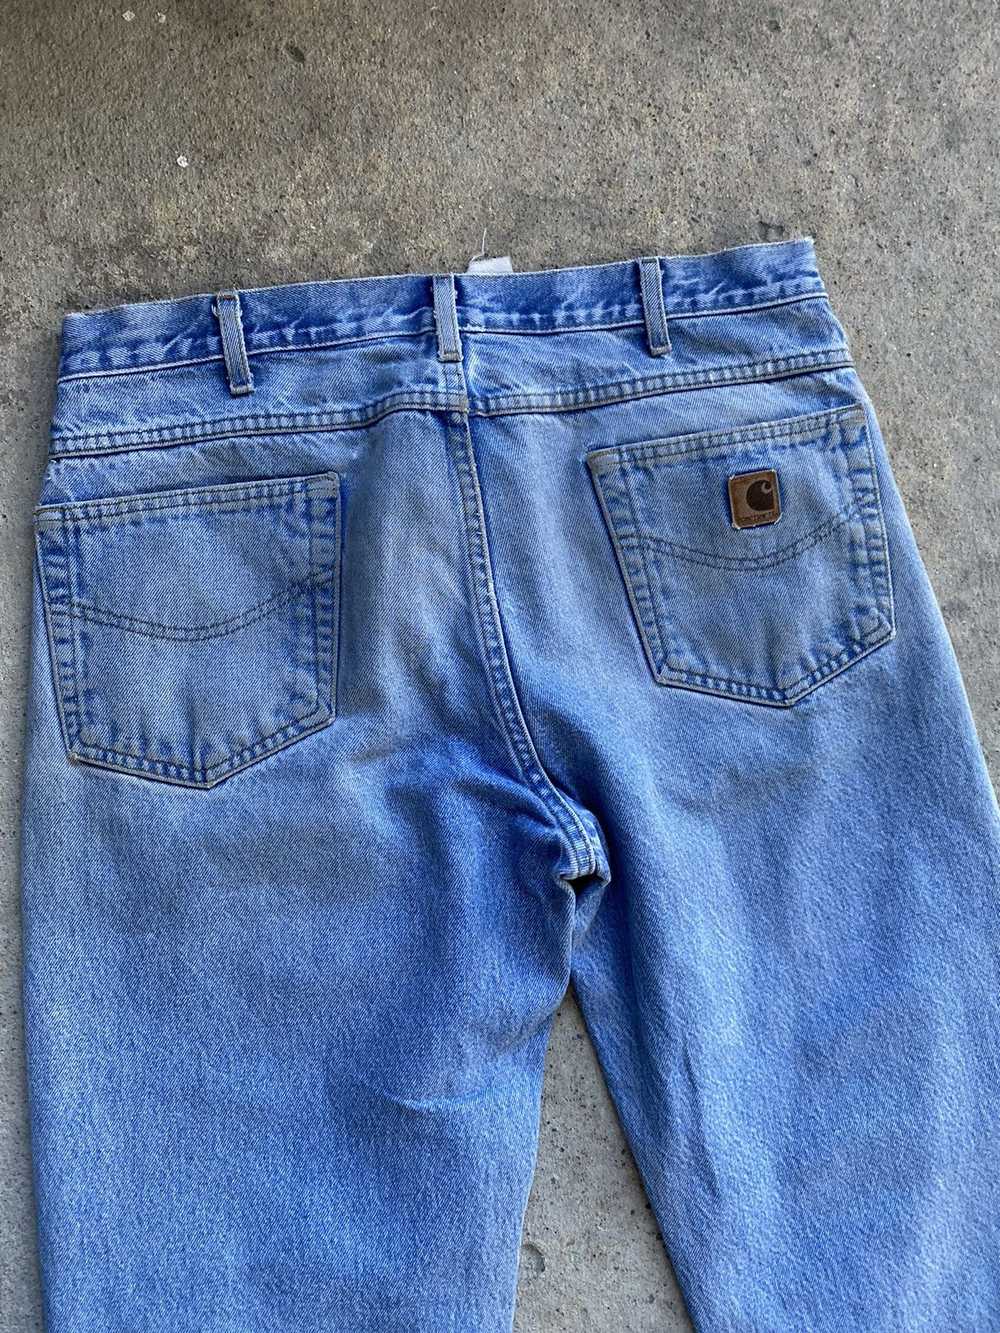 Carhartt × Vintage Vintage Carhartt Denim Jeans - image 5